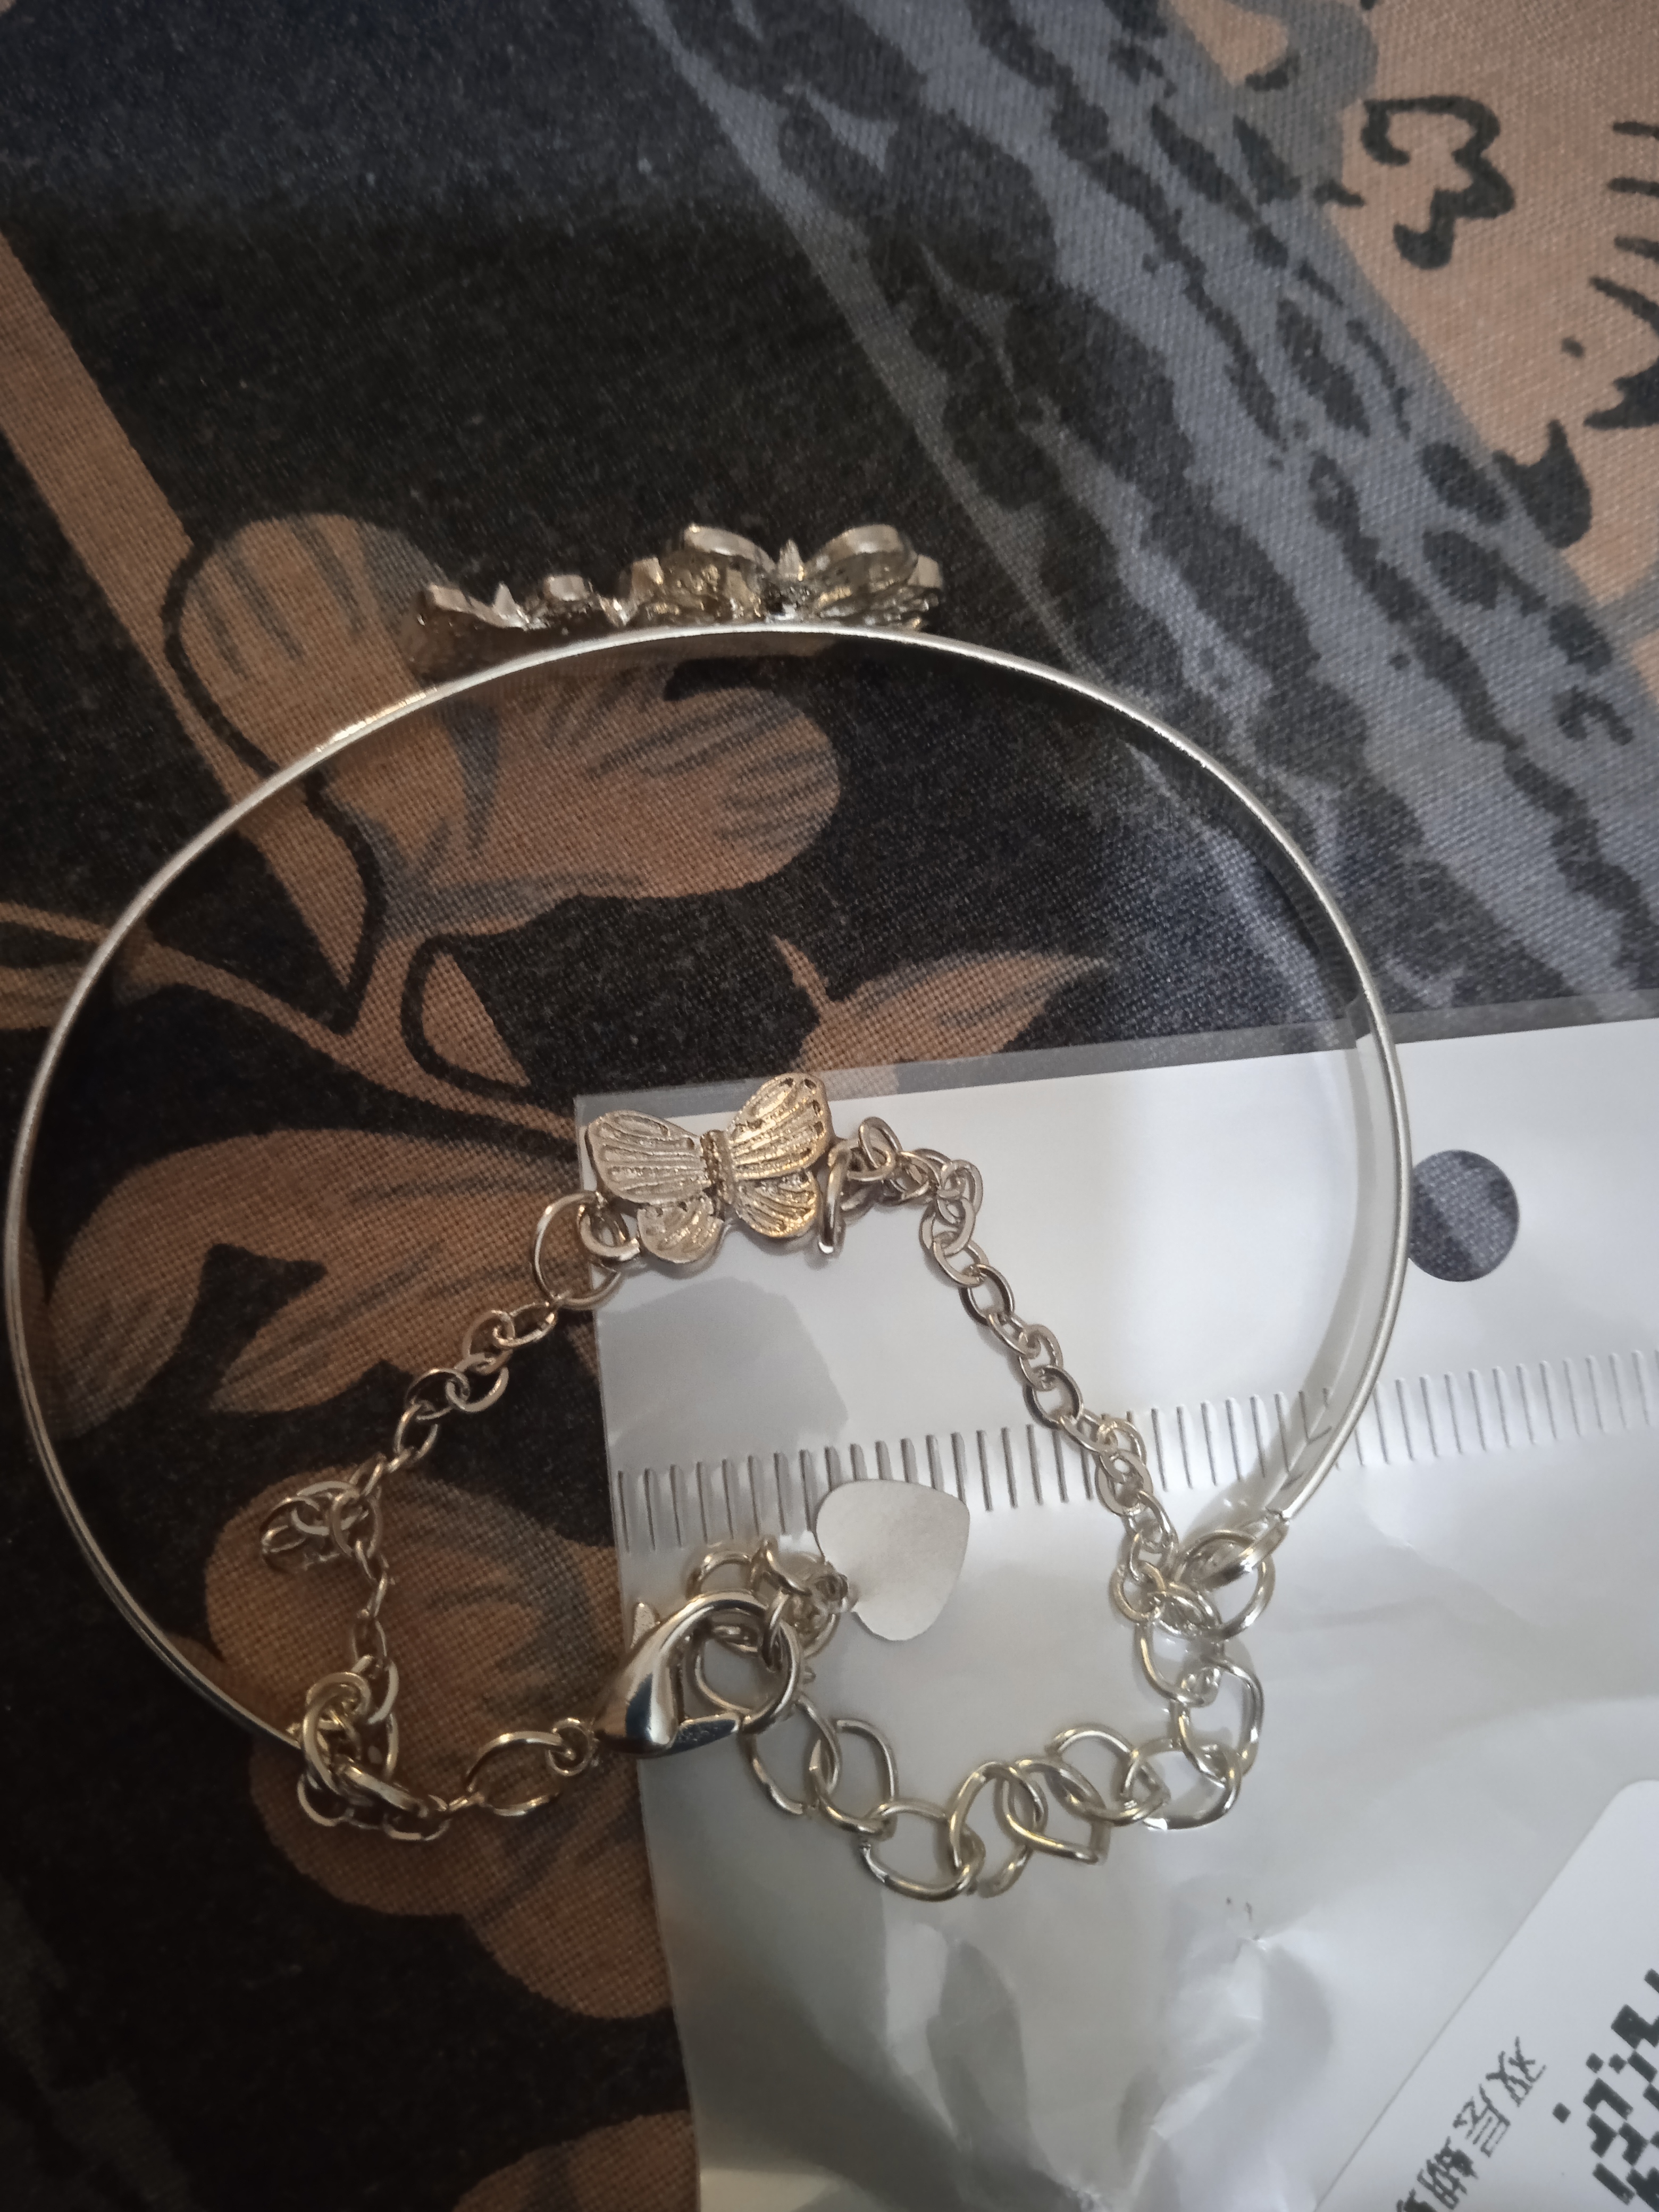 My Blooming Strass Bracelet S00 - Women - Fashion Jewelry